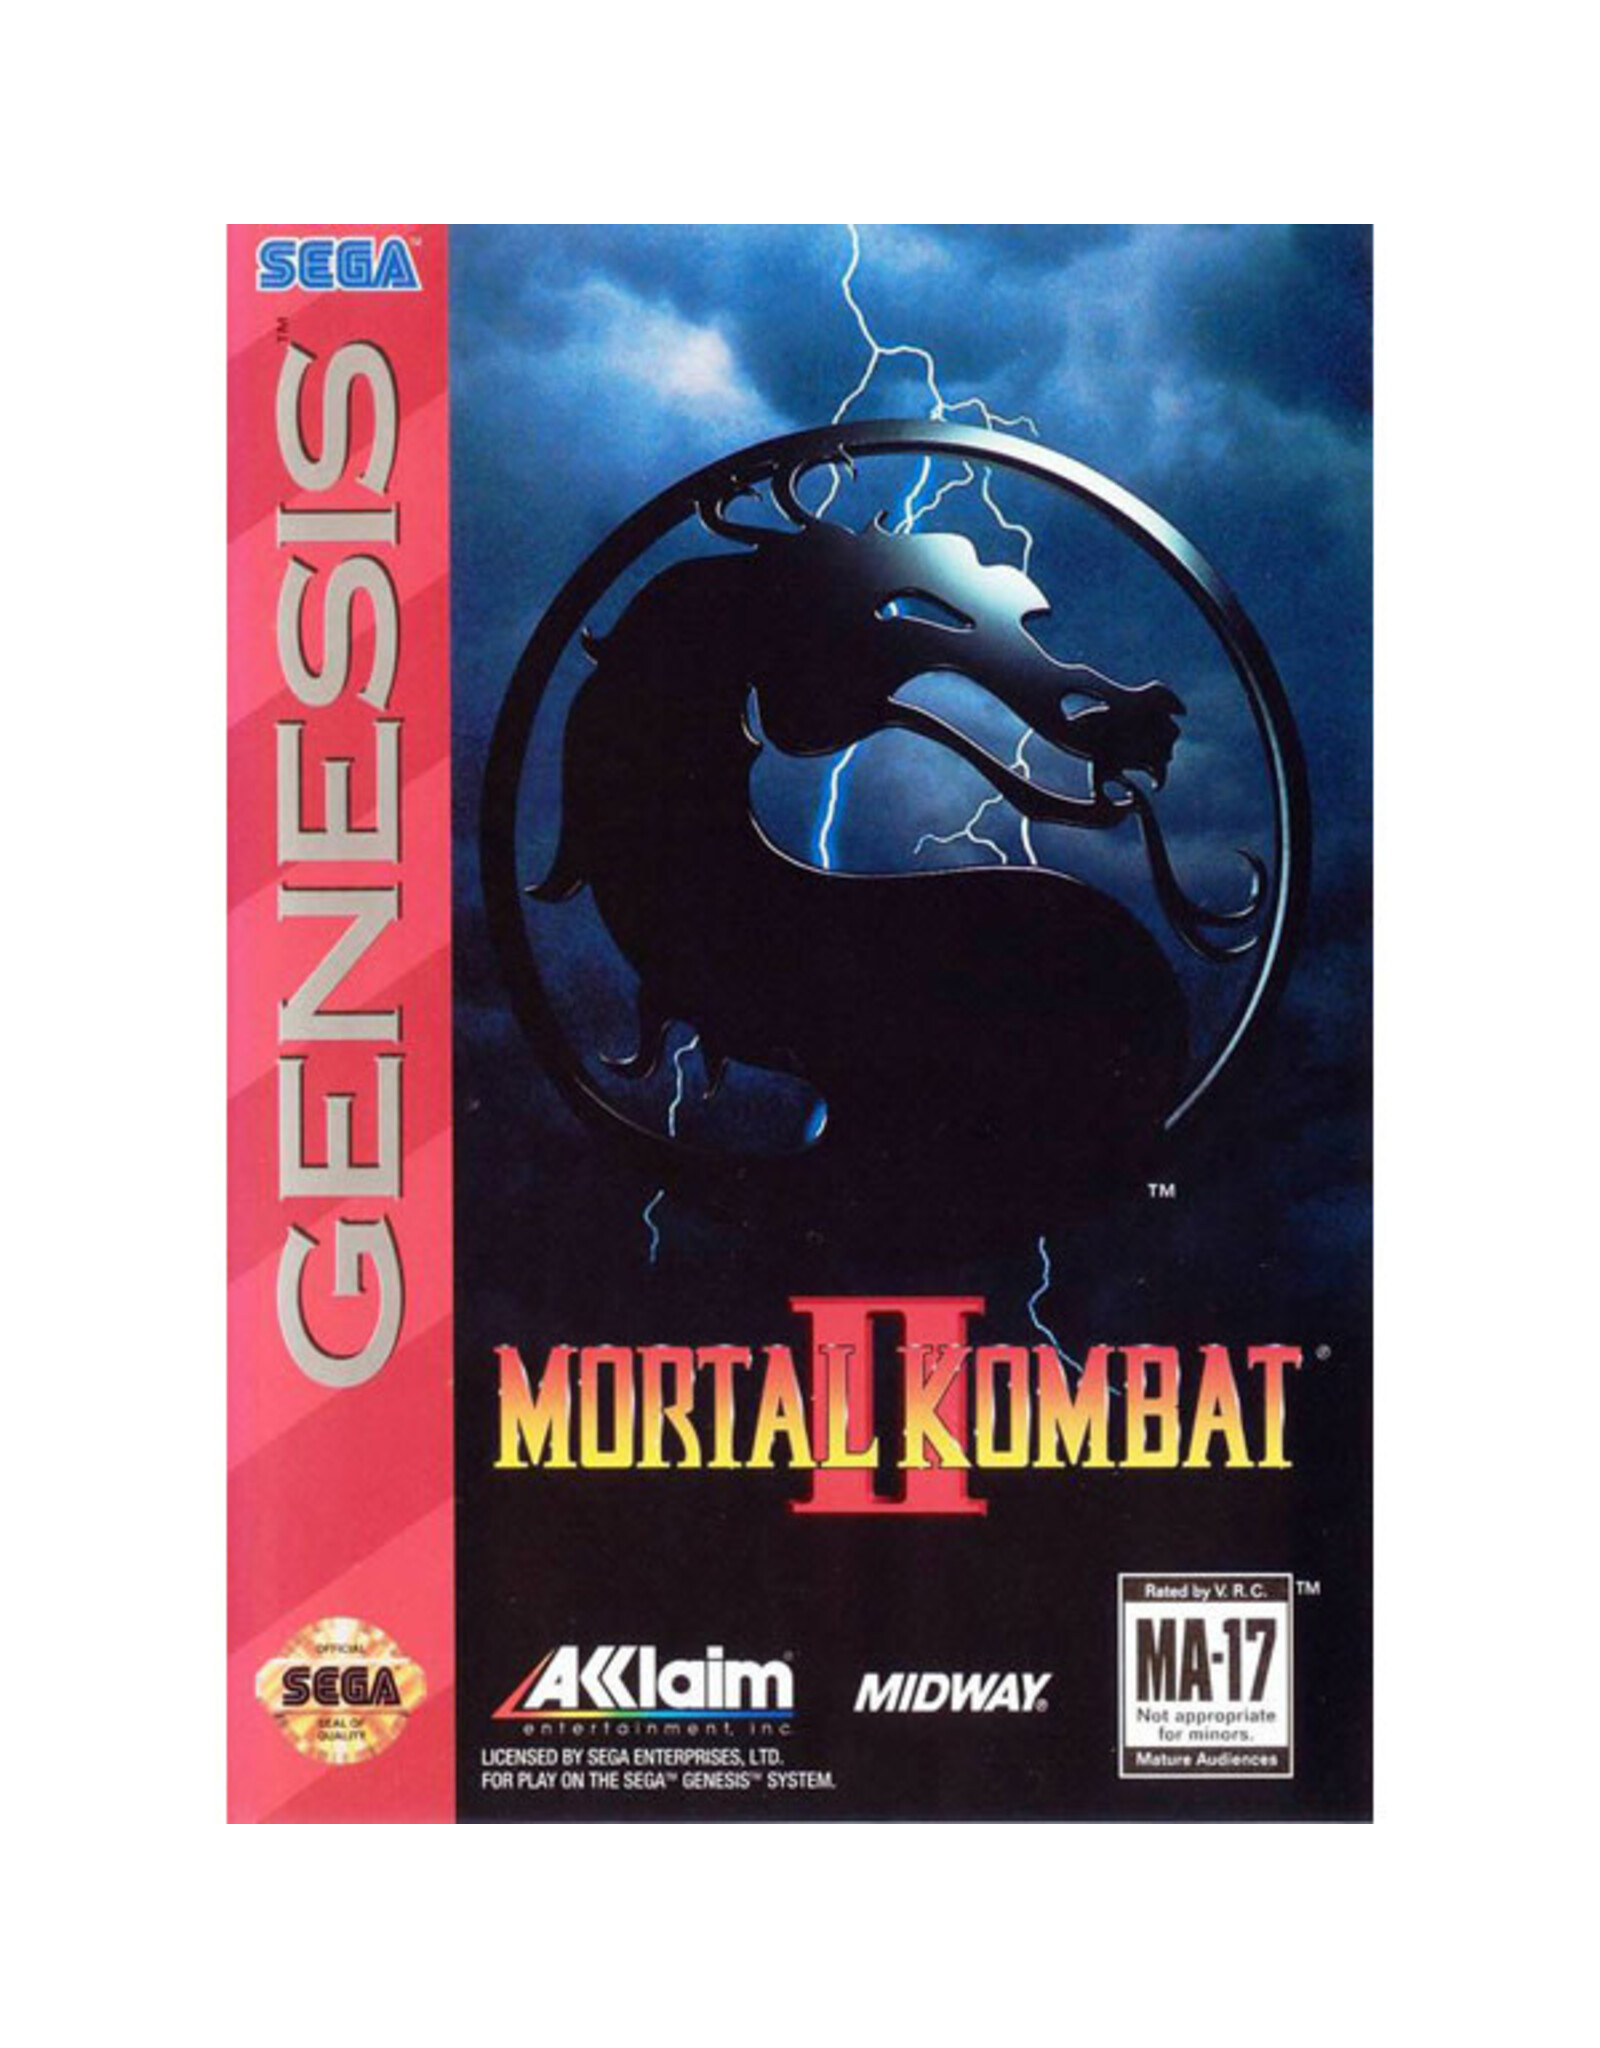 Sega Used Game - Genesis - Mortal Kombat 2 [Cart Only]